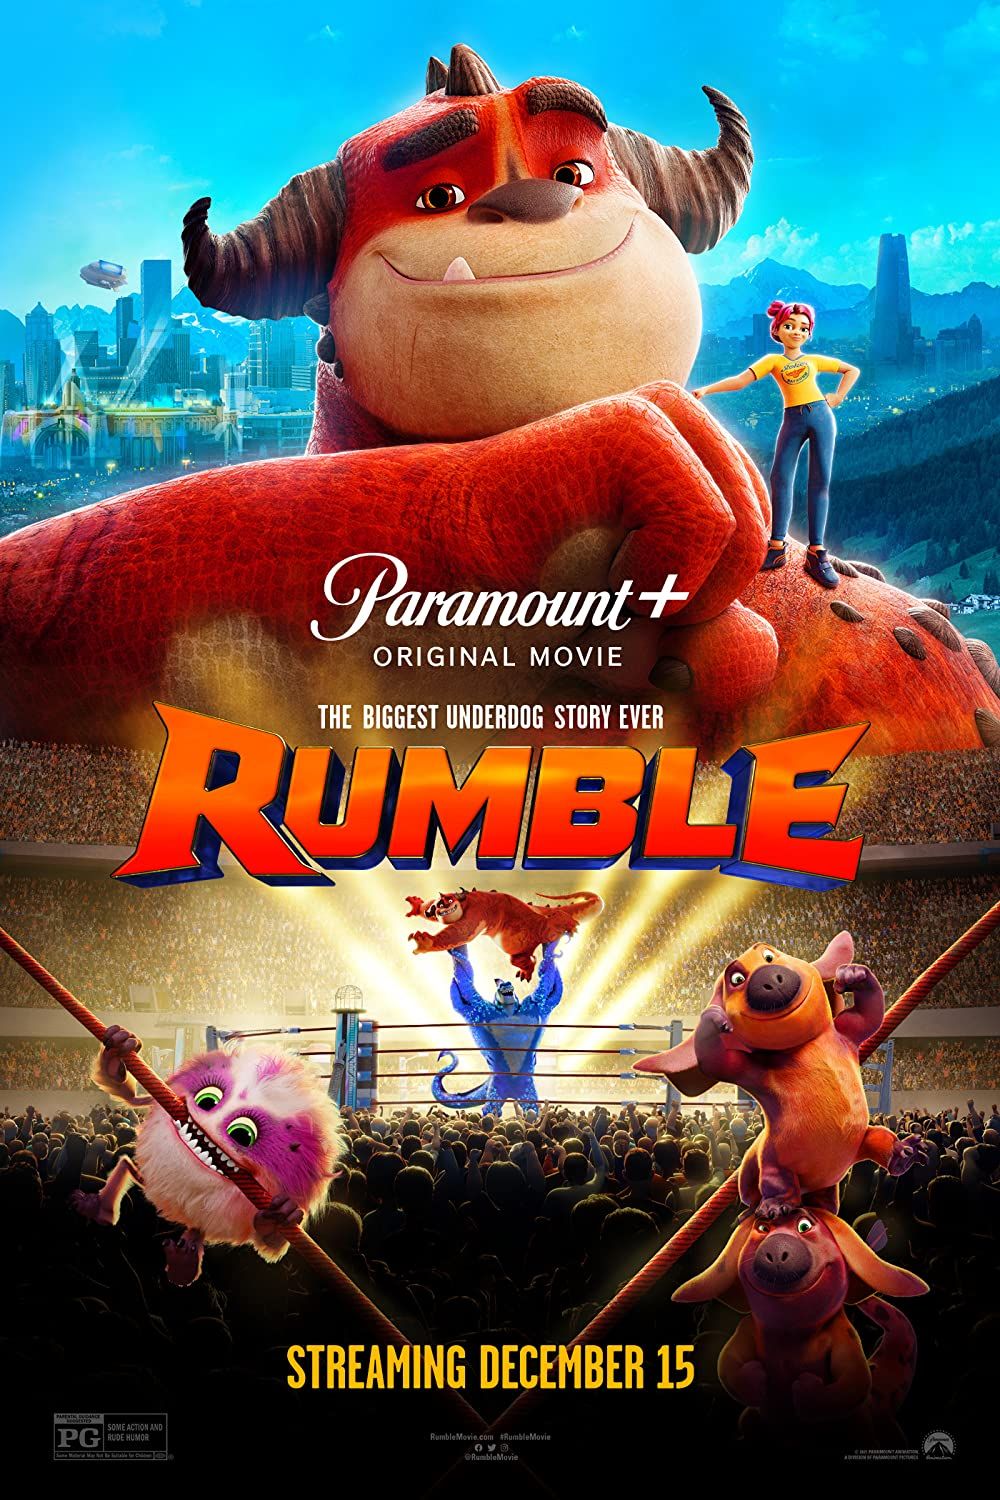 Rumble (2021) Hindi Dubbed HDRip download full movie